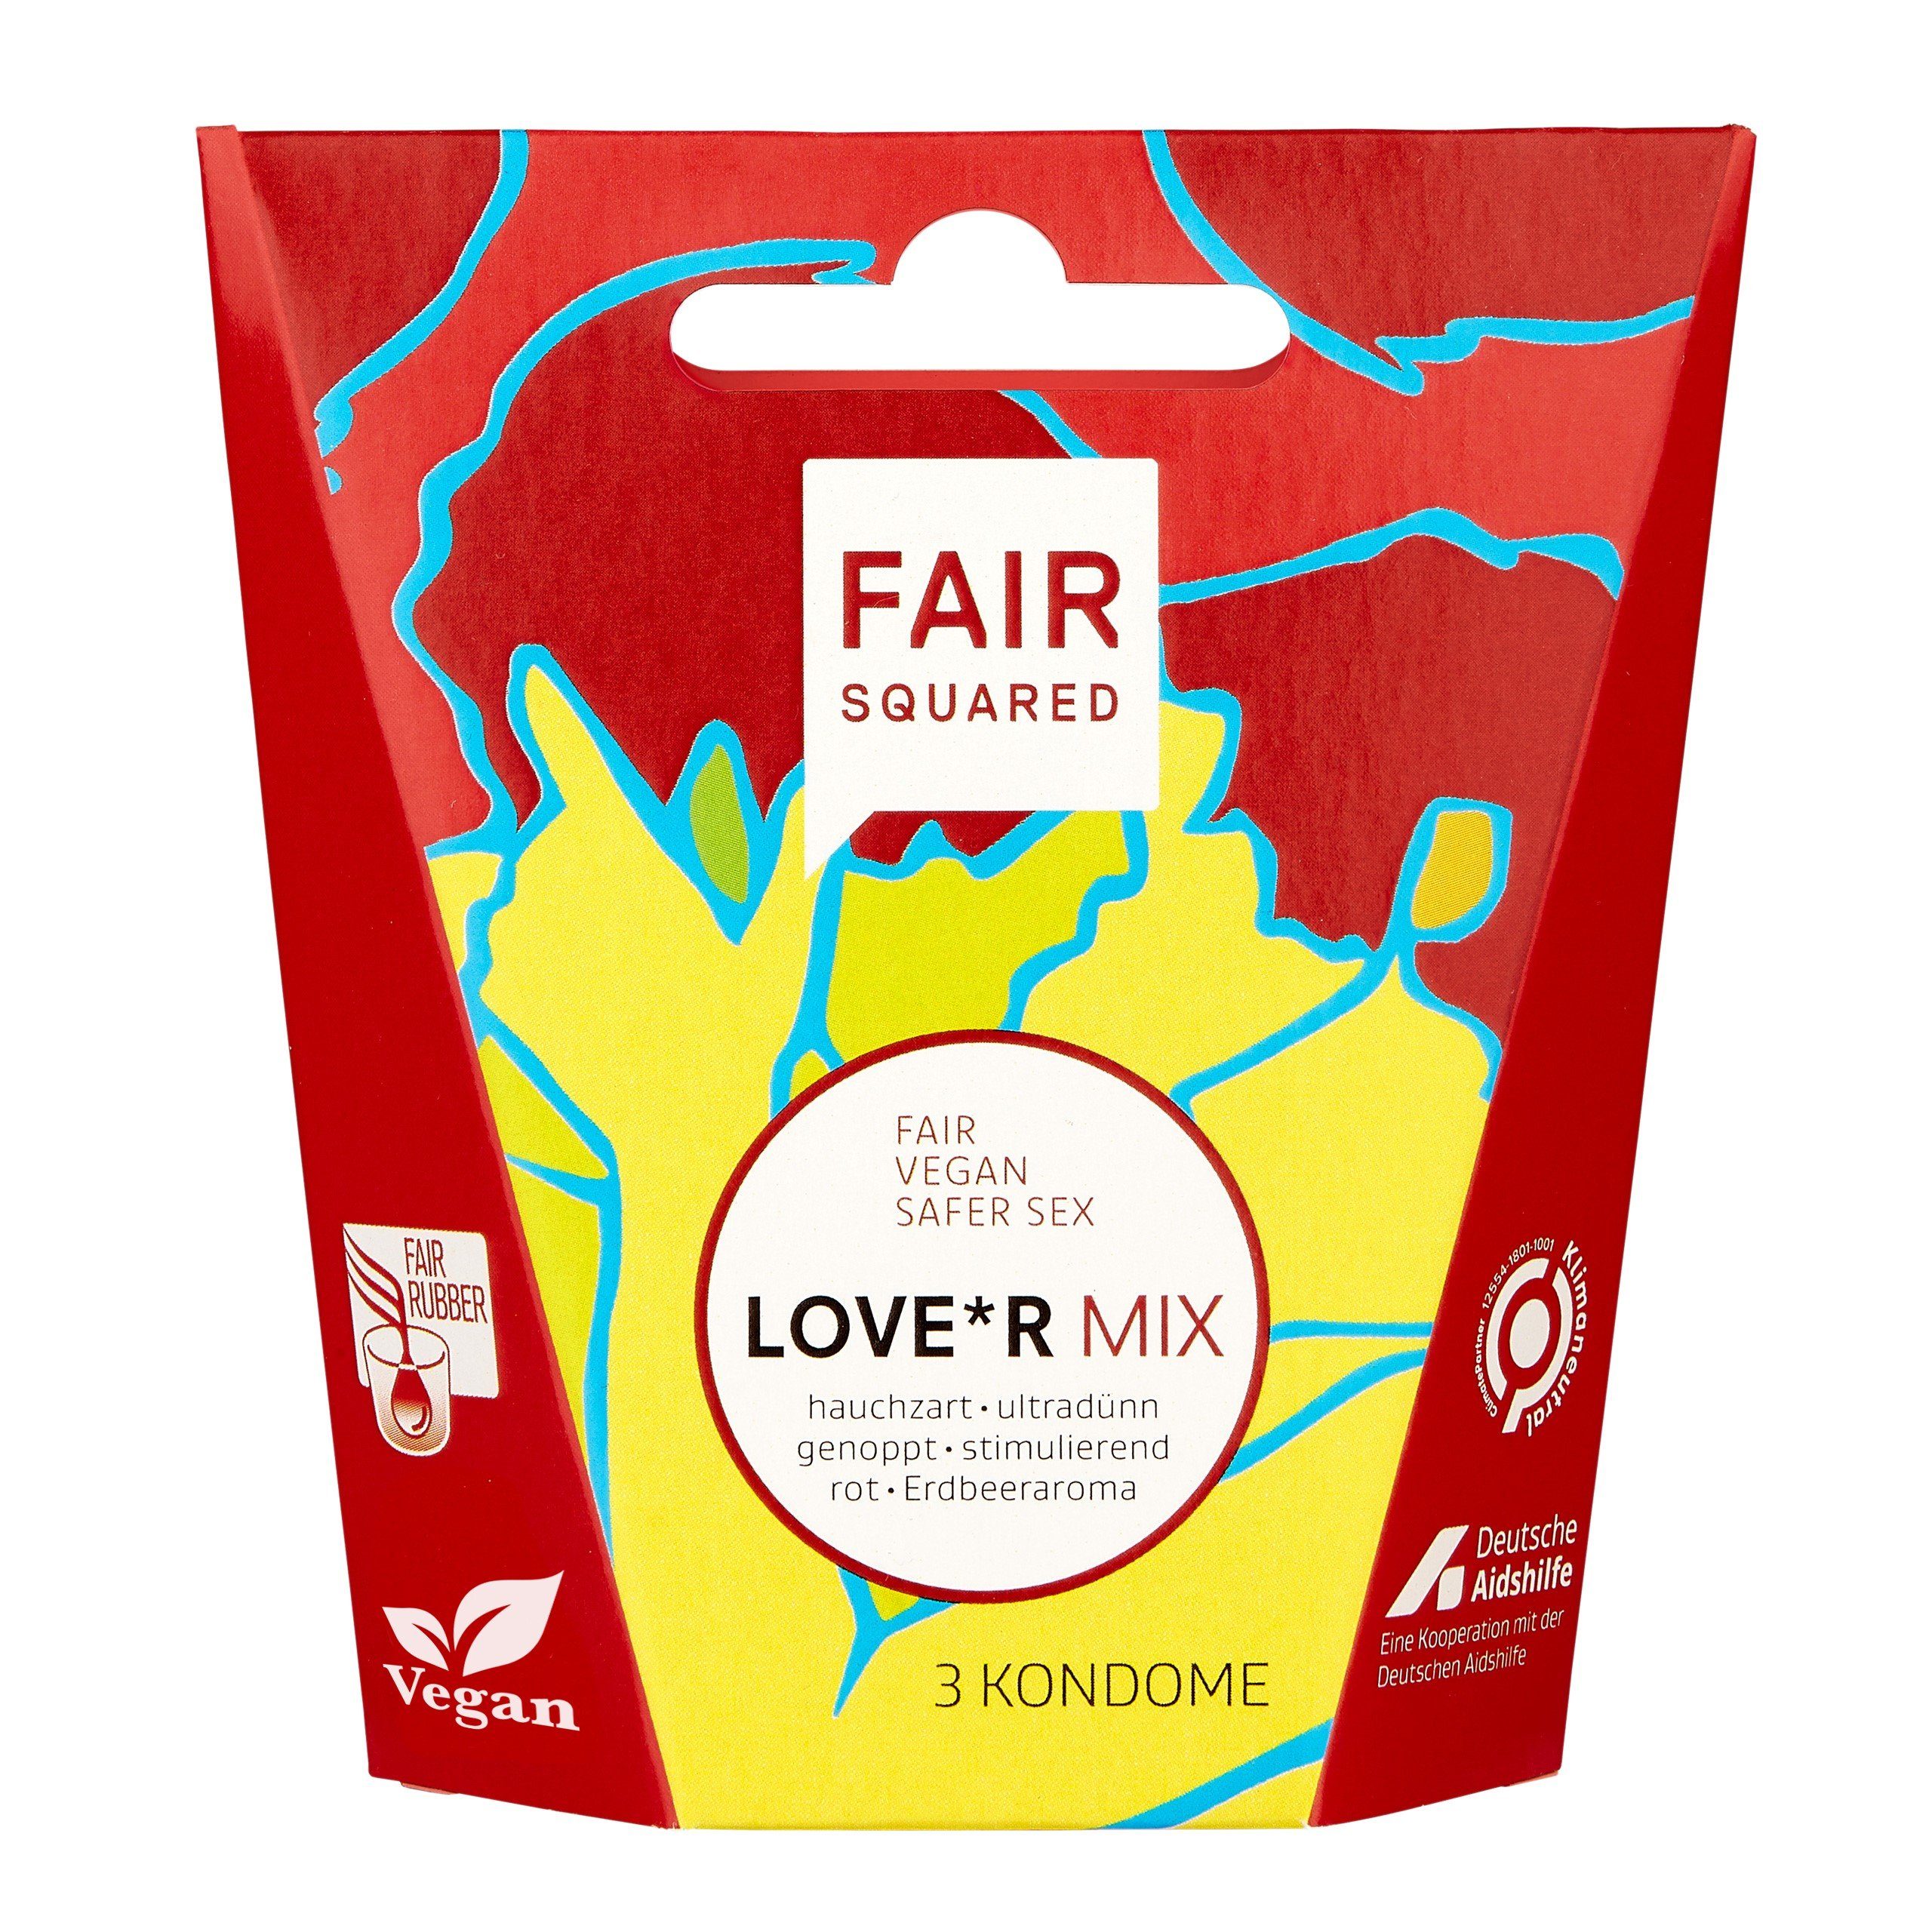 Fair Squared Kondome FAIR SQUARED vegane 10er LOVE*R MIX Kondome